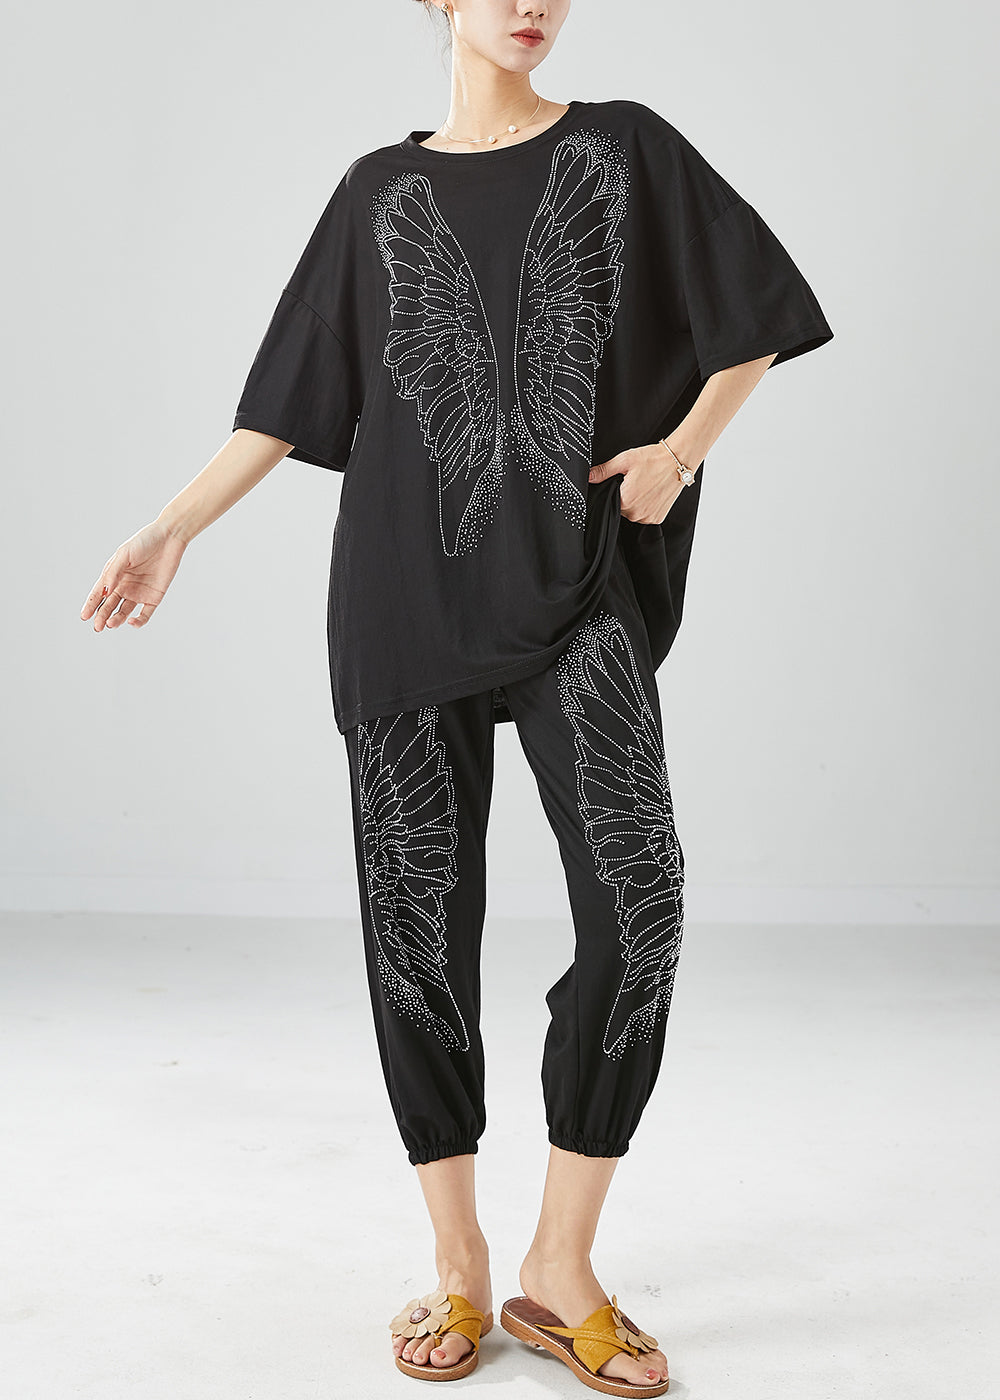 Italian Black Oversized Print Cotton Two Piece Set Women Clothing Summer LY6137 - fabuloryshop